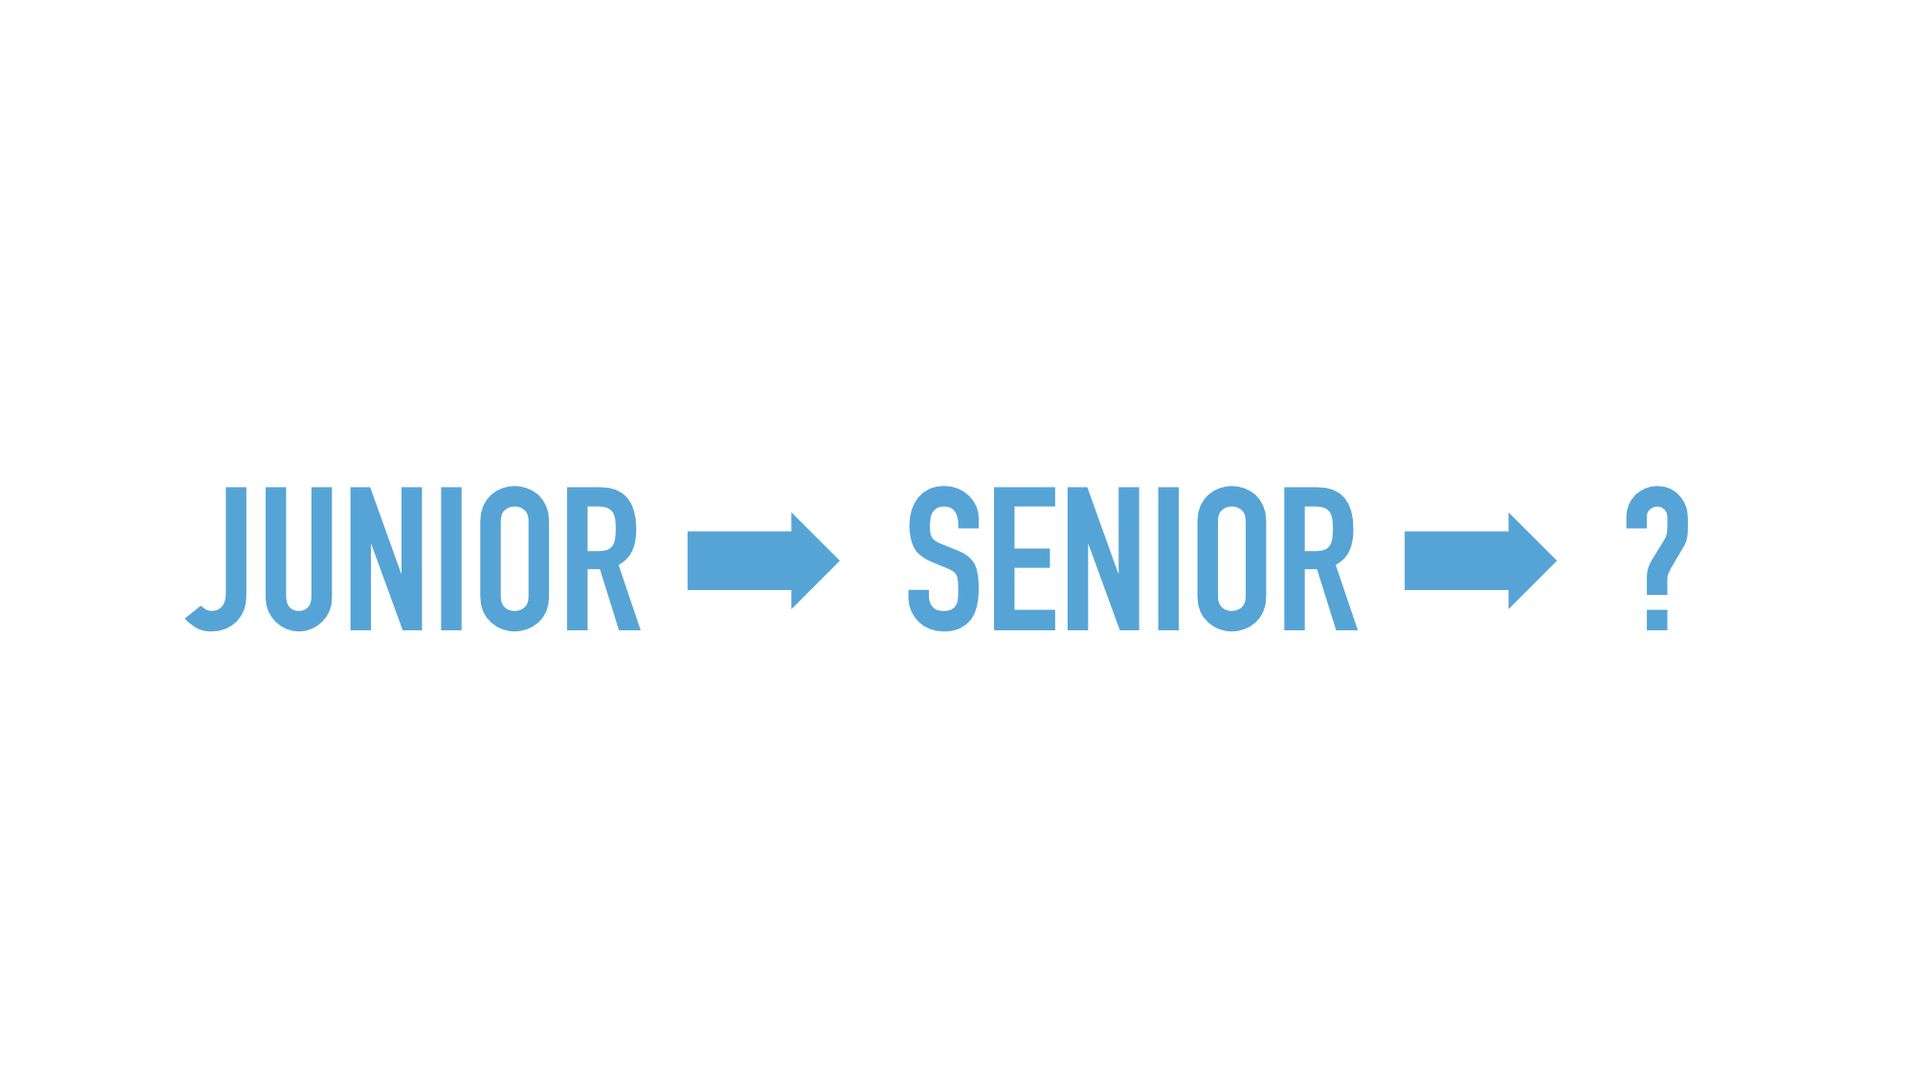 Slide text: Junior -> Senior -> ?